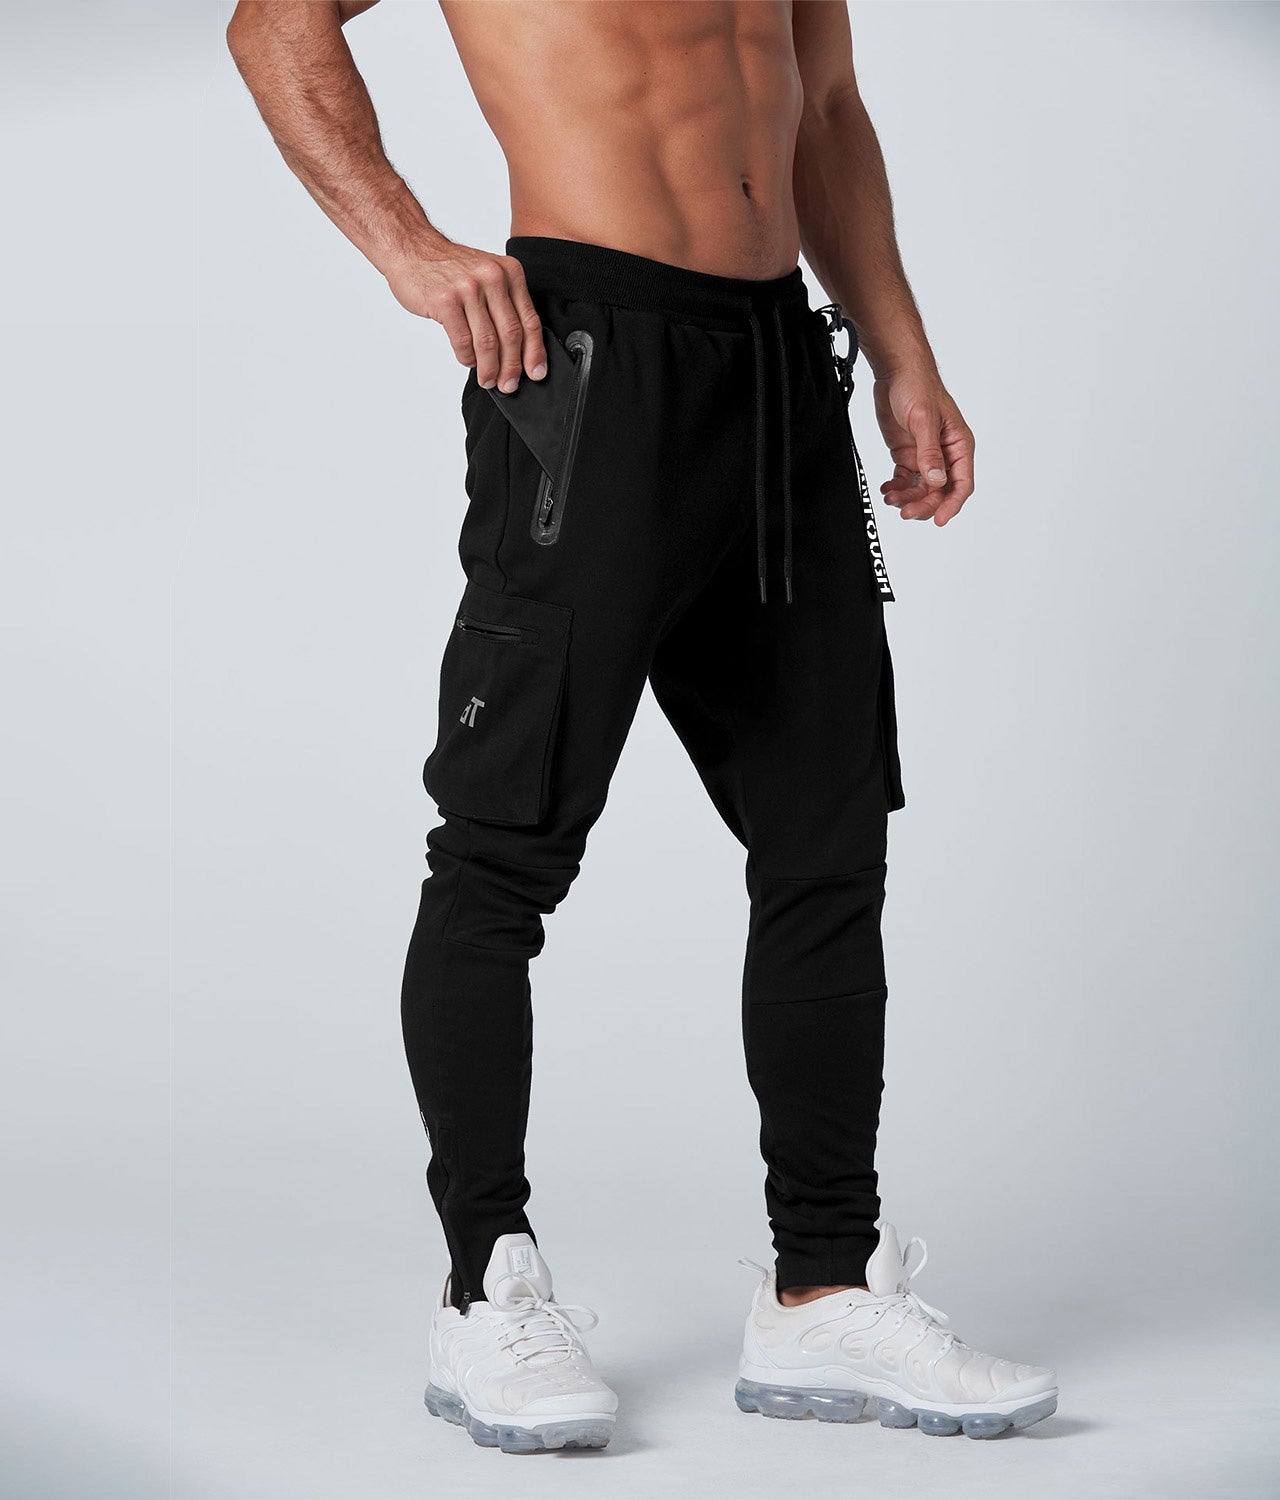 Men's Striped Bodybuilding Baggy Workout Pants | INSANO – Insano Extreme